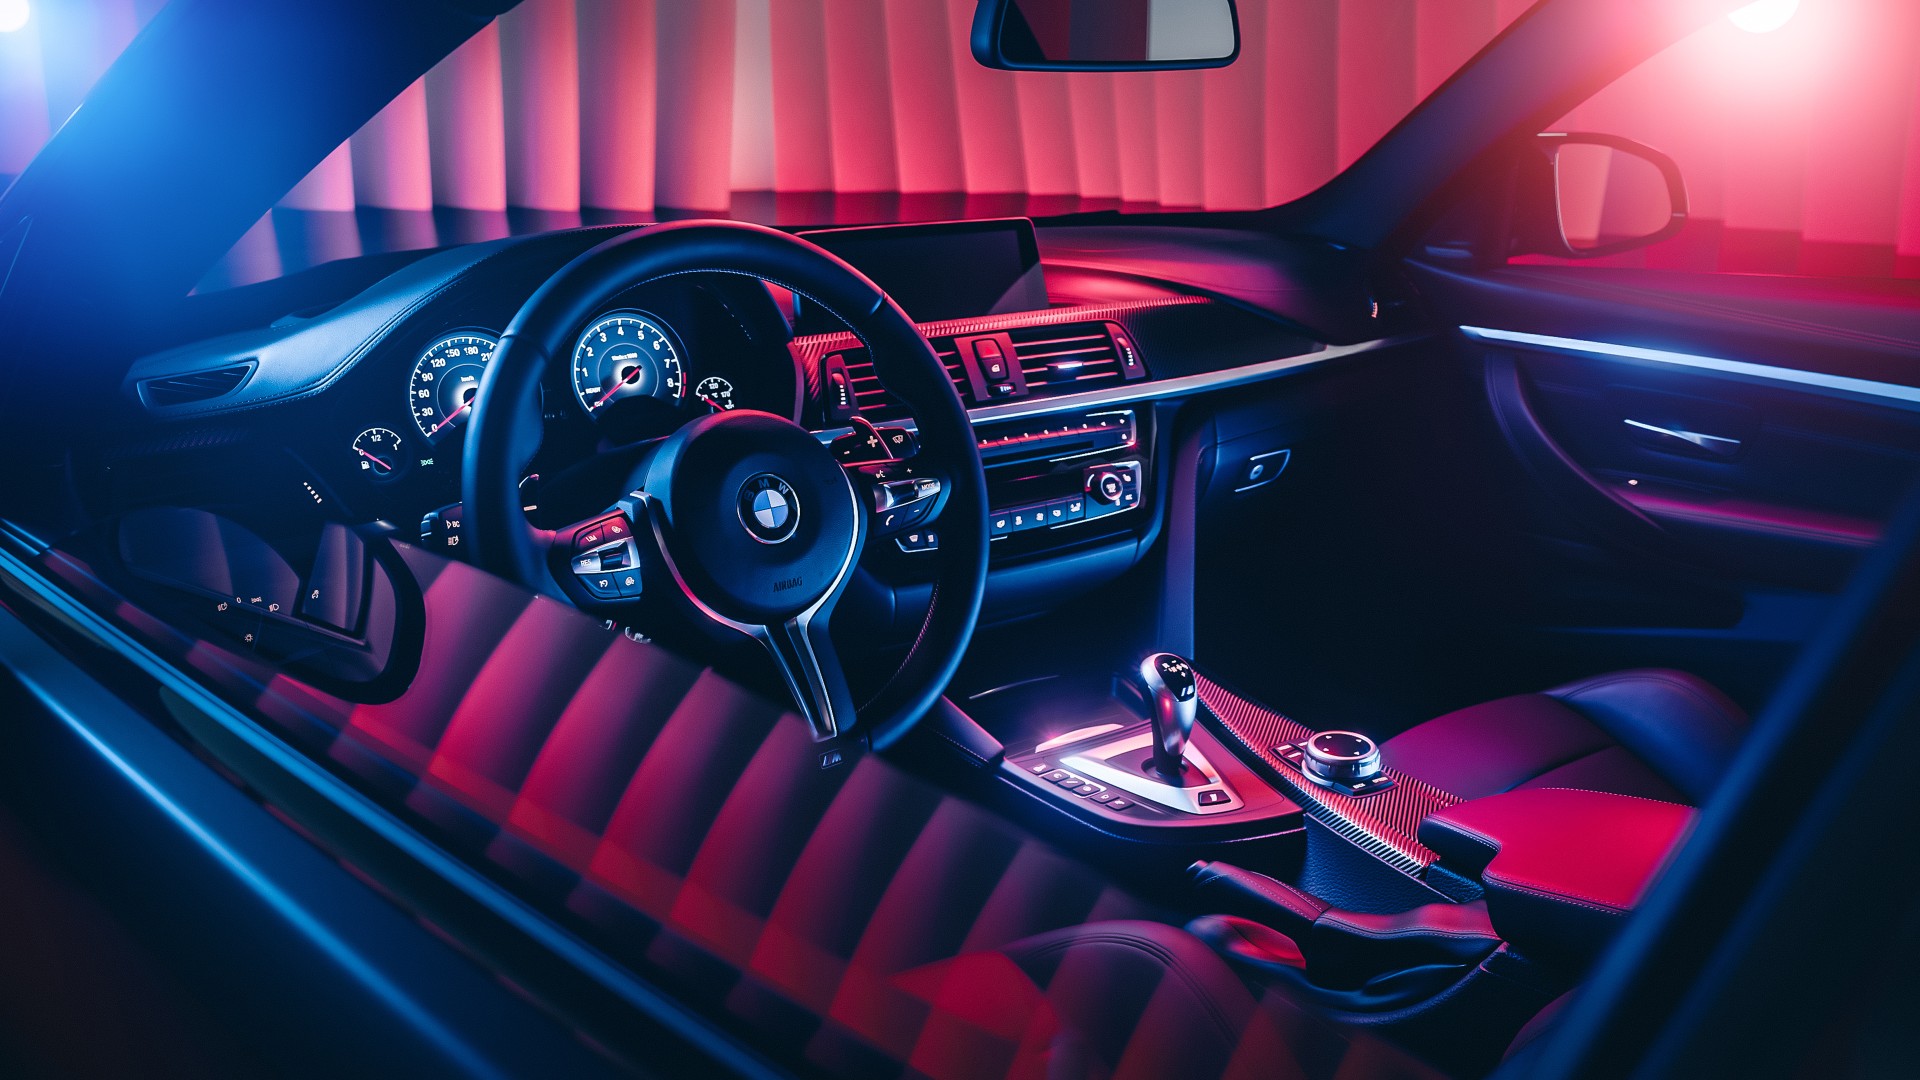 BMW M4 M Performance Interior 4K Wallpaper | HD Car Wallpapers | ID #13575